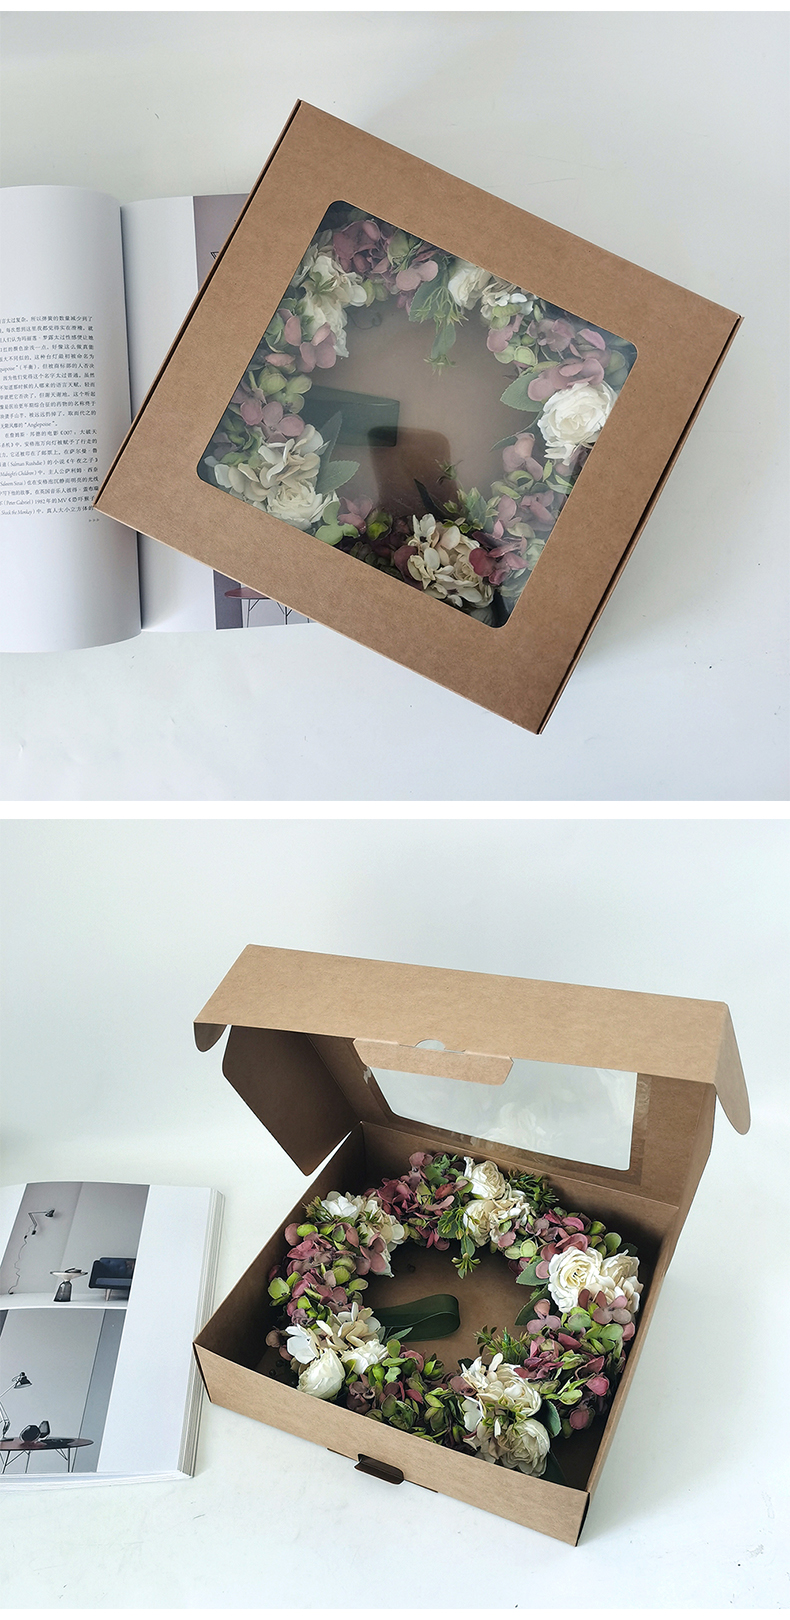 Amazon top seller wedding decoration artificial plastic flower wreath supplies silk flower wedding wreath